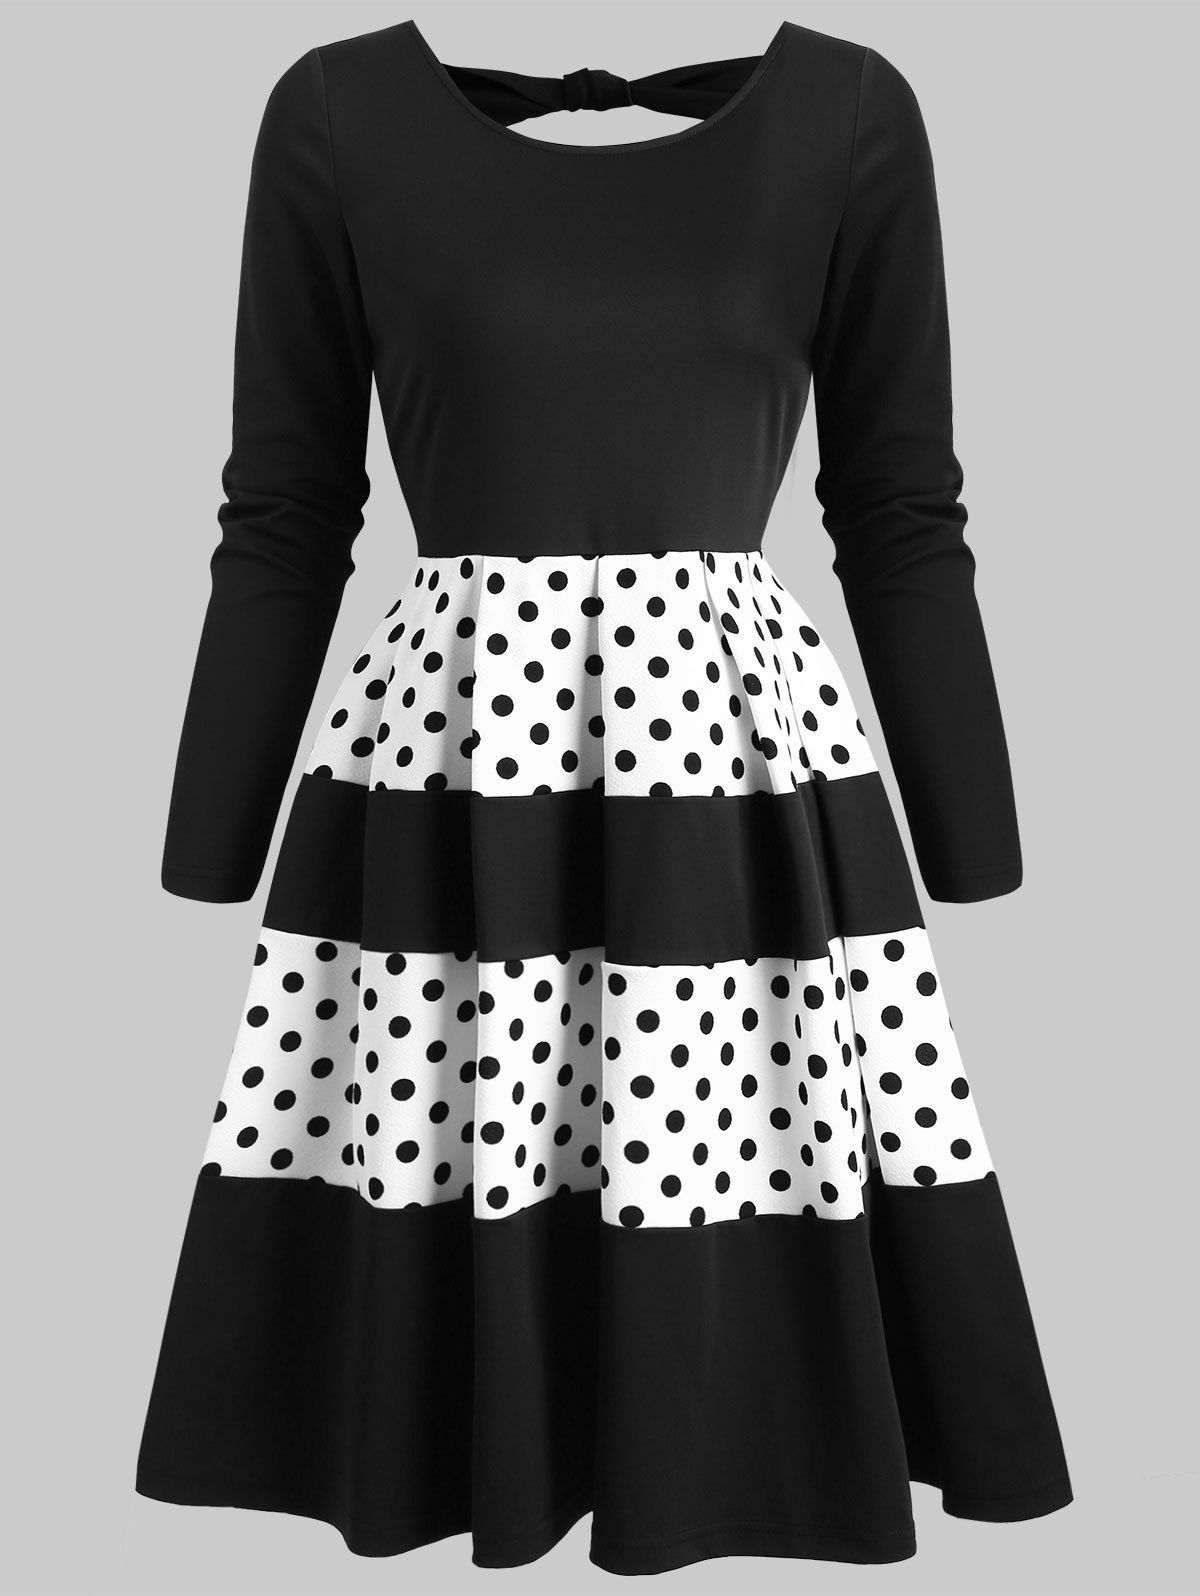 Polka Dot Back Cut Out Flare Rockabilly Style Dress - BLACK L